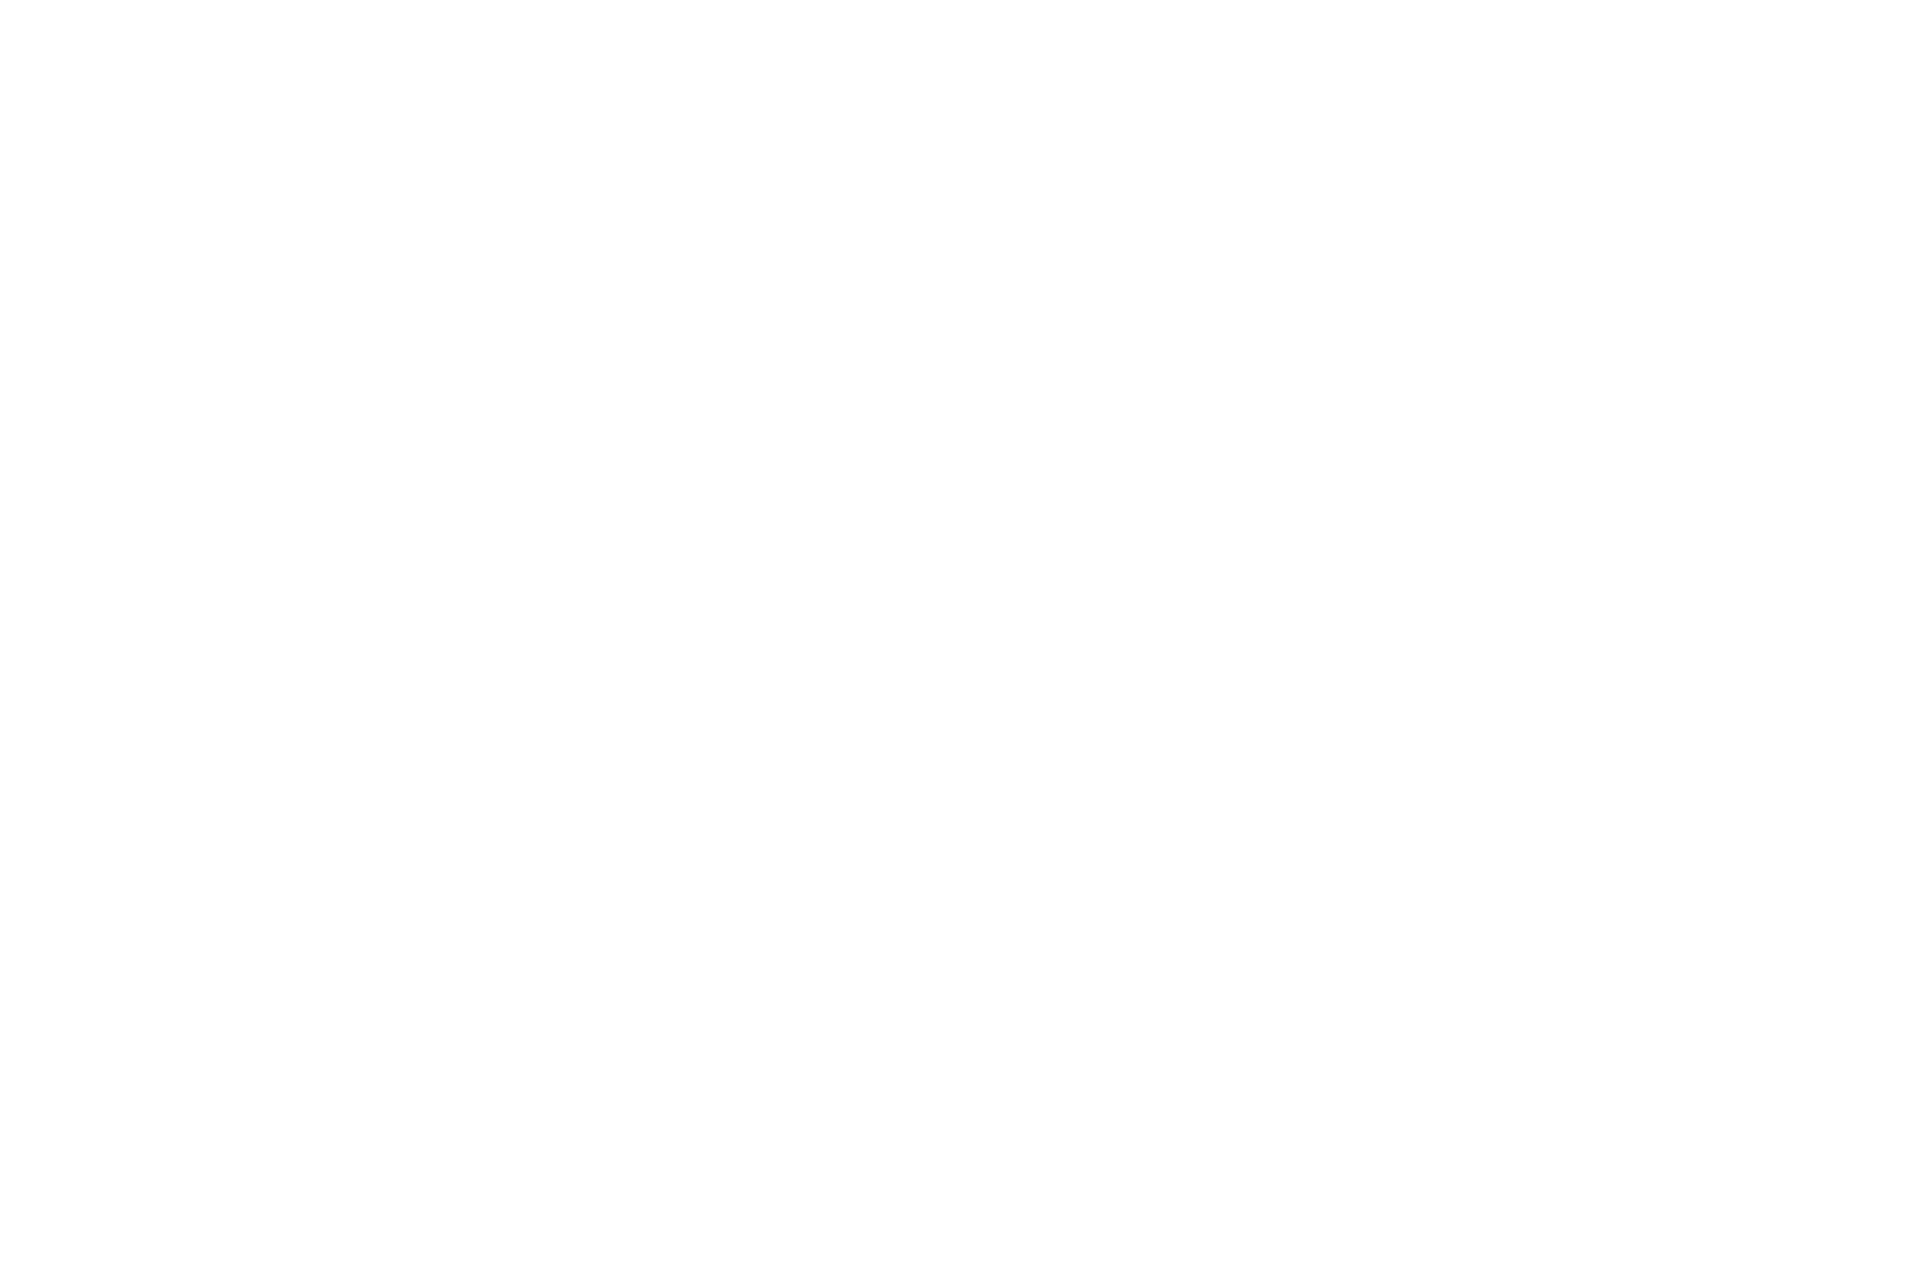 ikea-holz-logo-screen